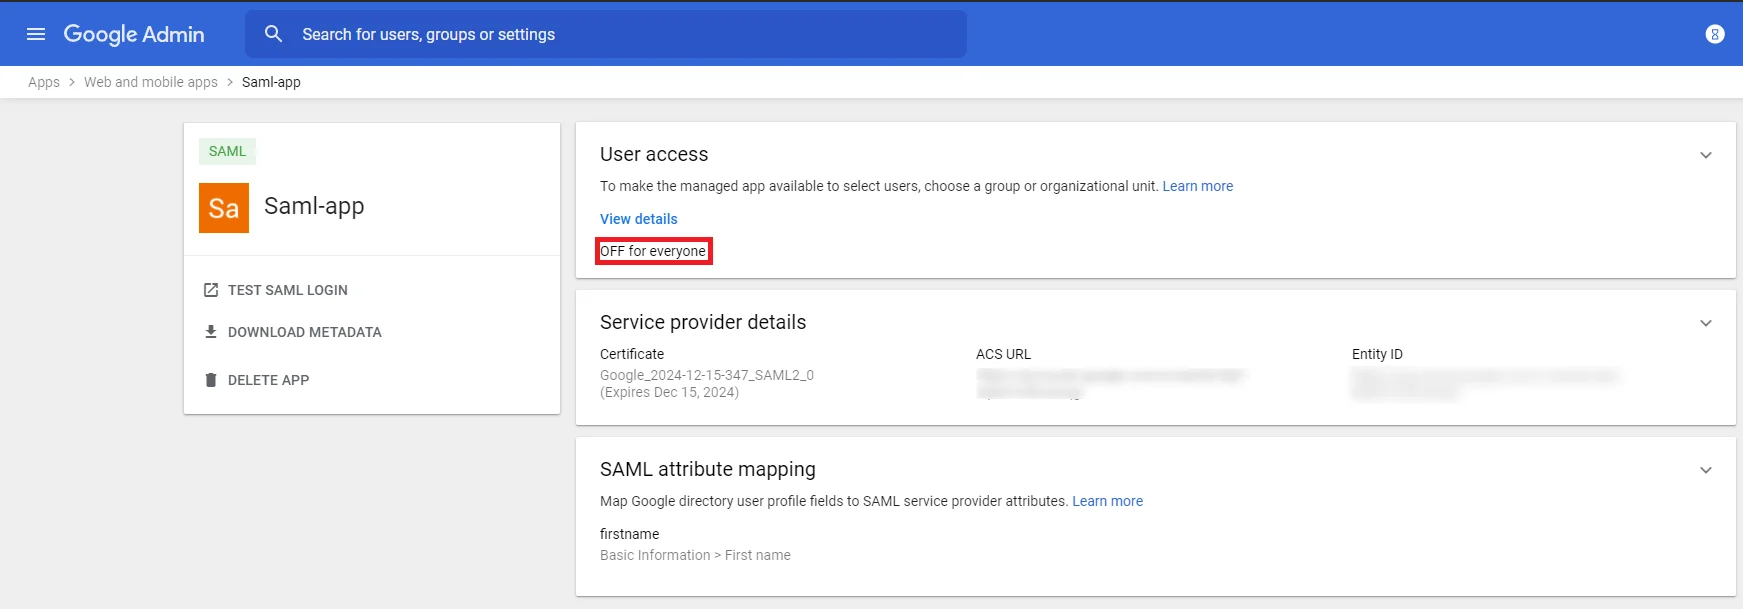 nopCommerce Single Sign-On (SSO) using Google as IDP - Turn-On go to SAML Apps